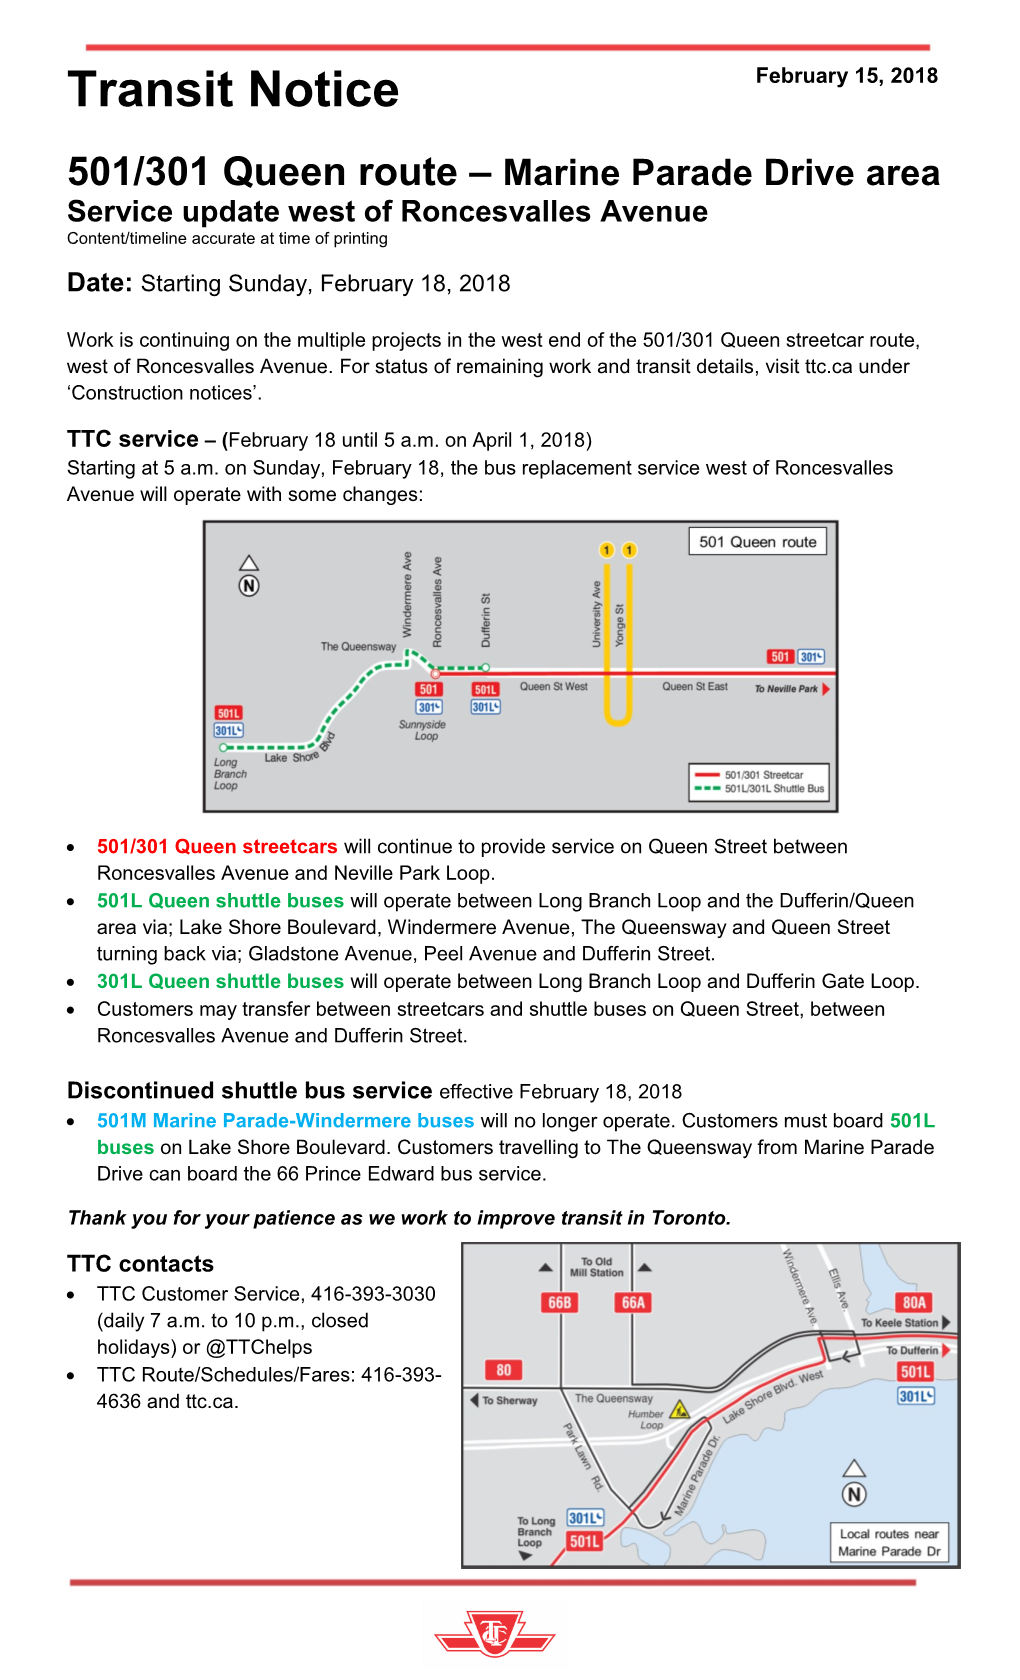 Transit Notice February 15, 2018